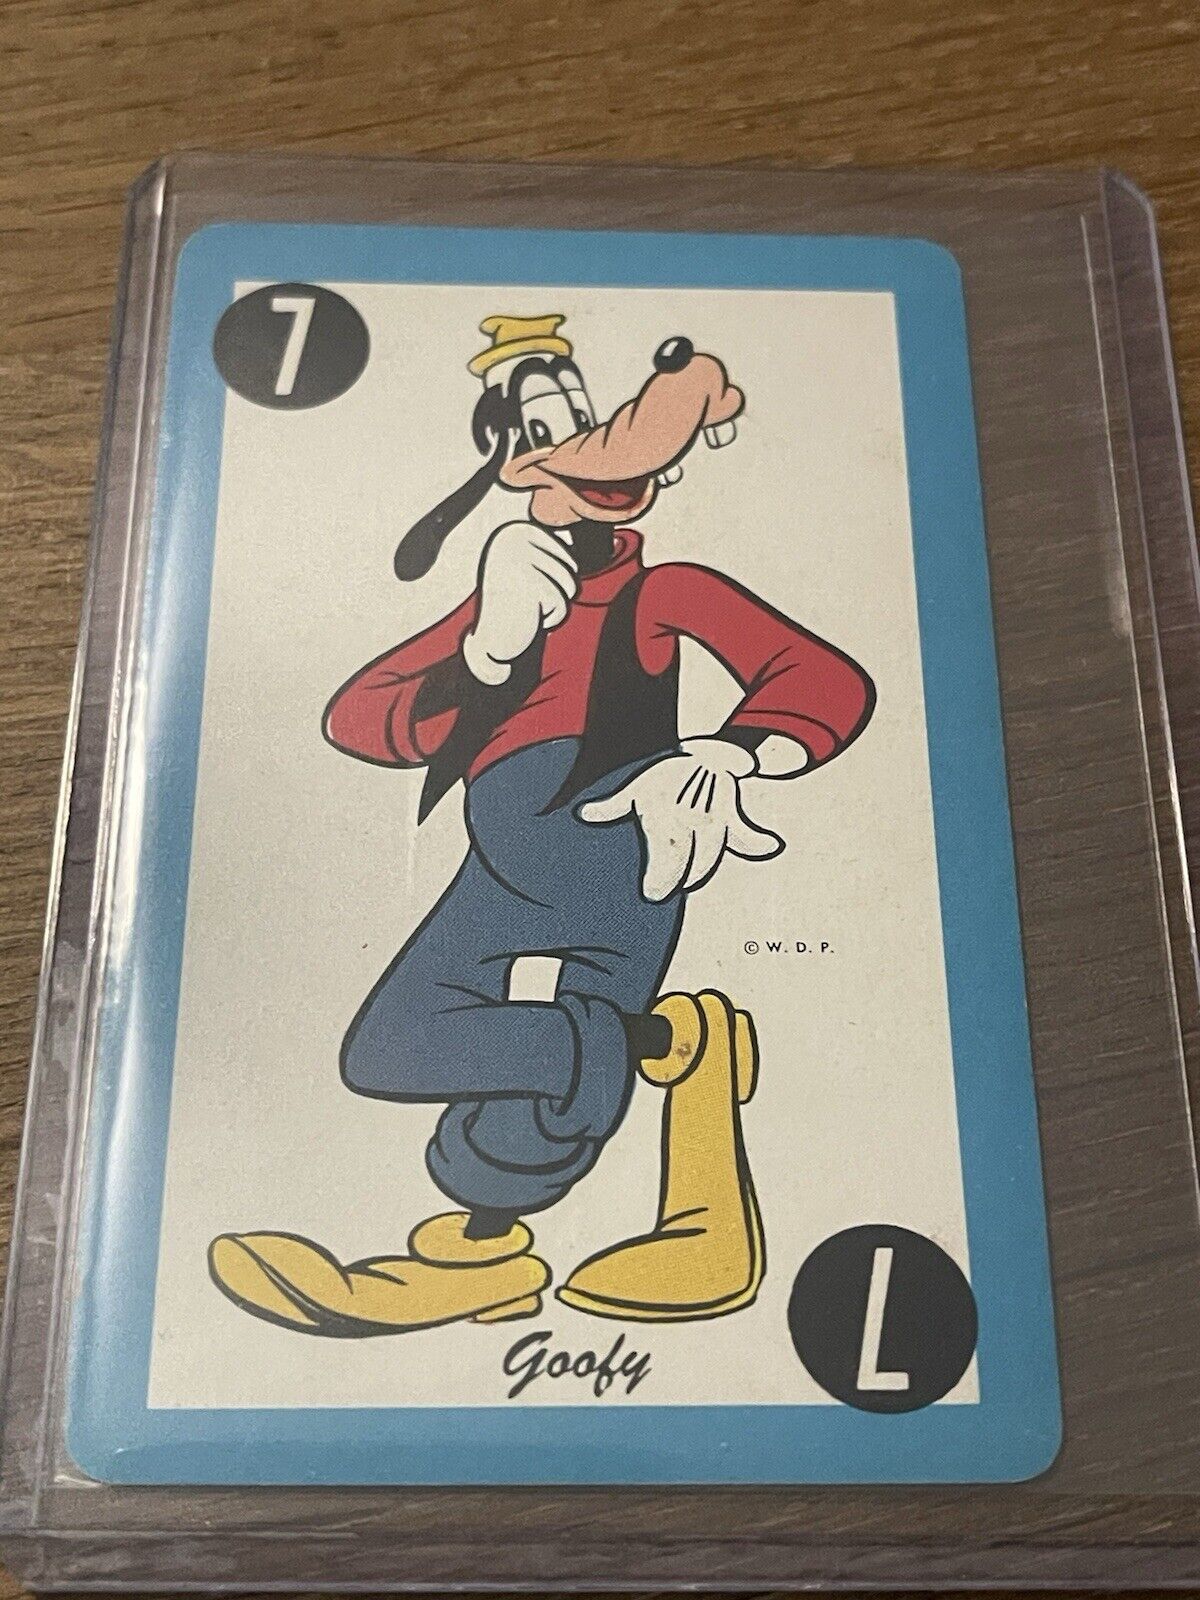 1949 WALT DISNEY PRODUCTIONS 🎥 WHITMAN CARD GAME GOOFY PLAYING CARD